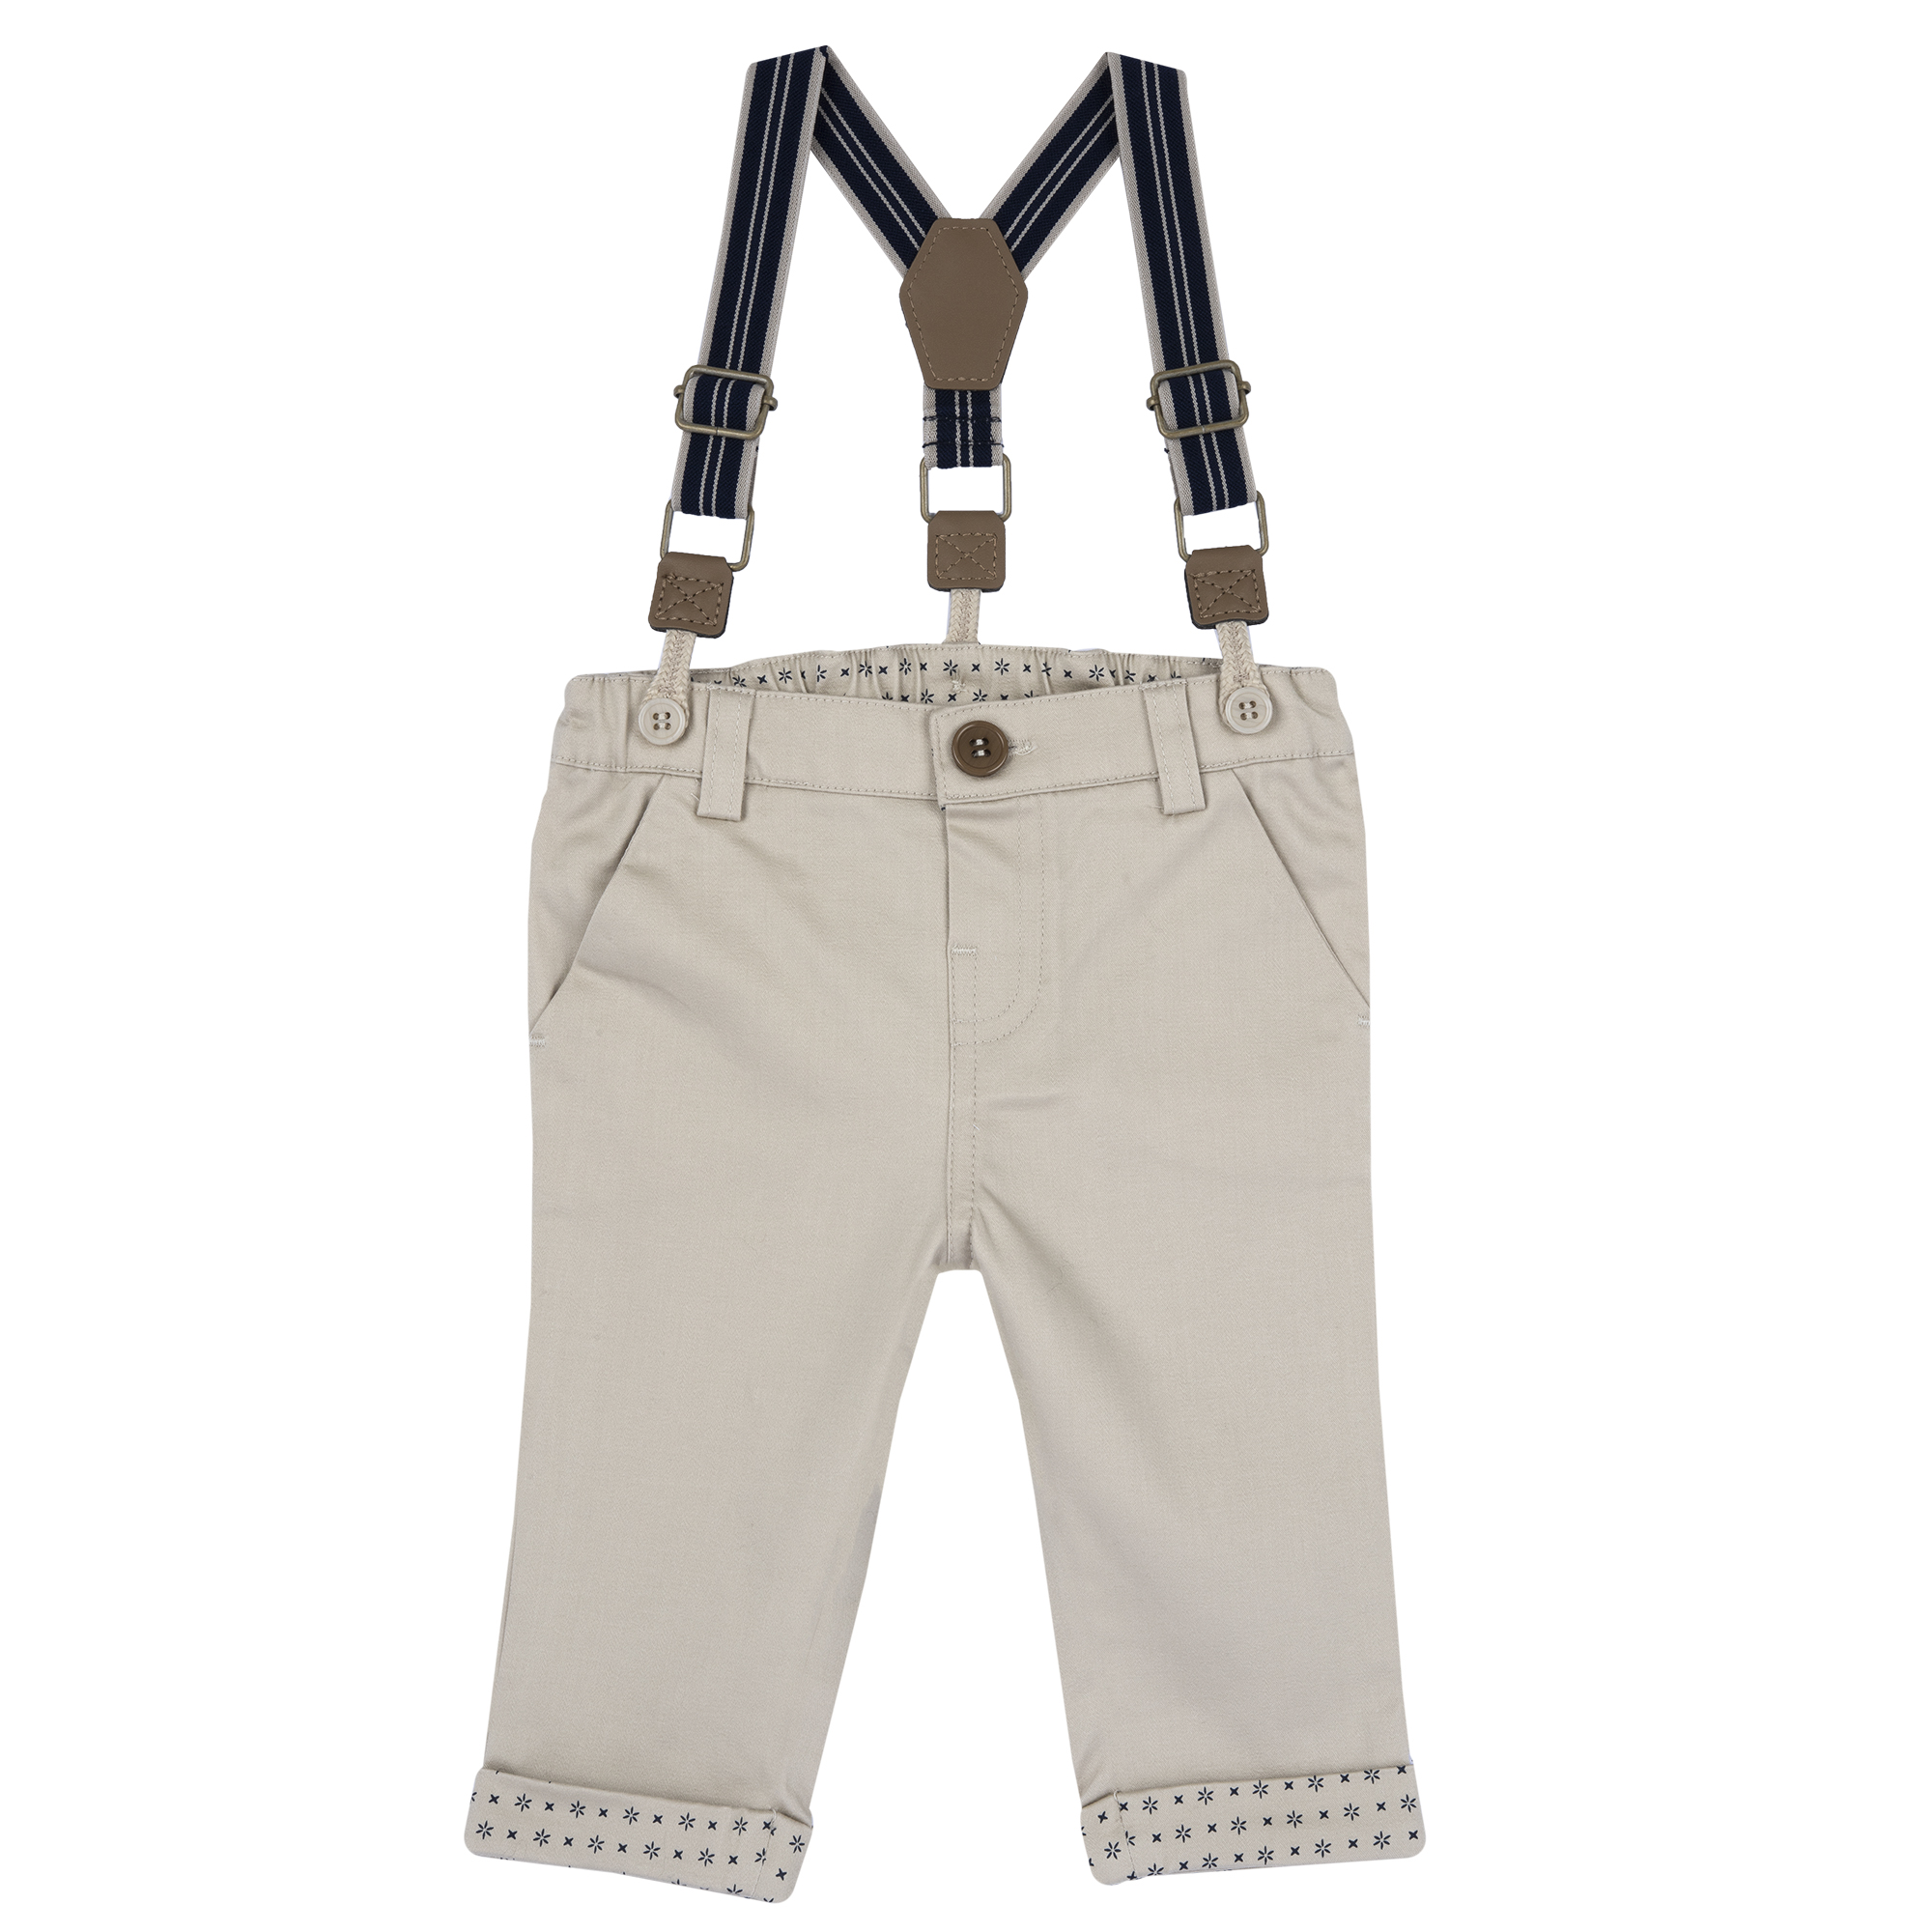 Pantaloni Copii Chicco, Bej Cu Model, 08827-64mfco